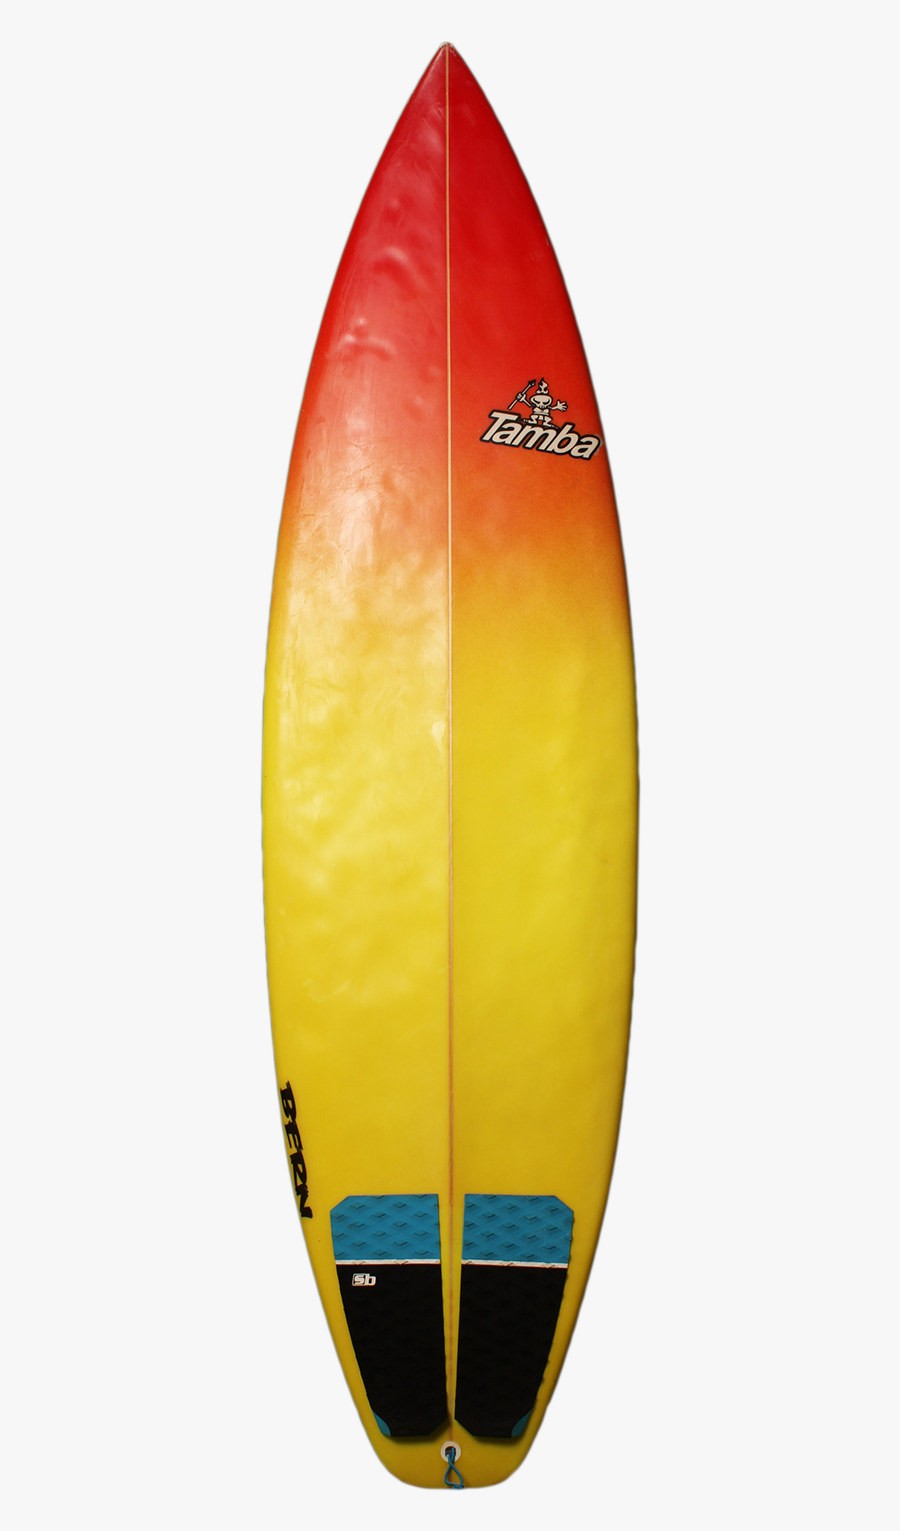 Surfboards Clipart, Transparent Clipart